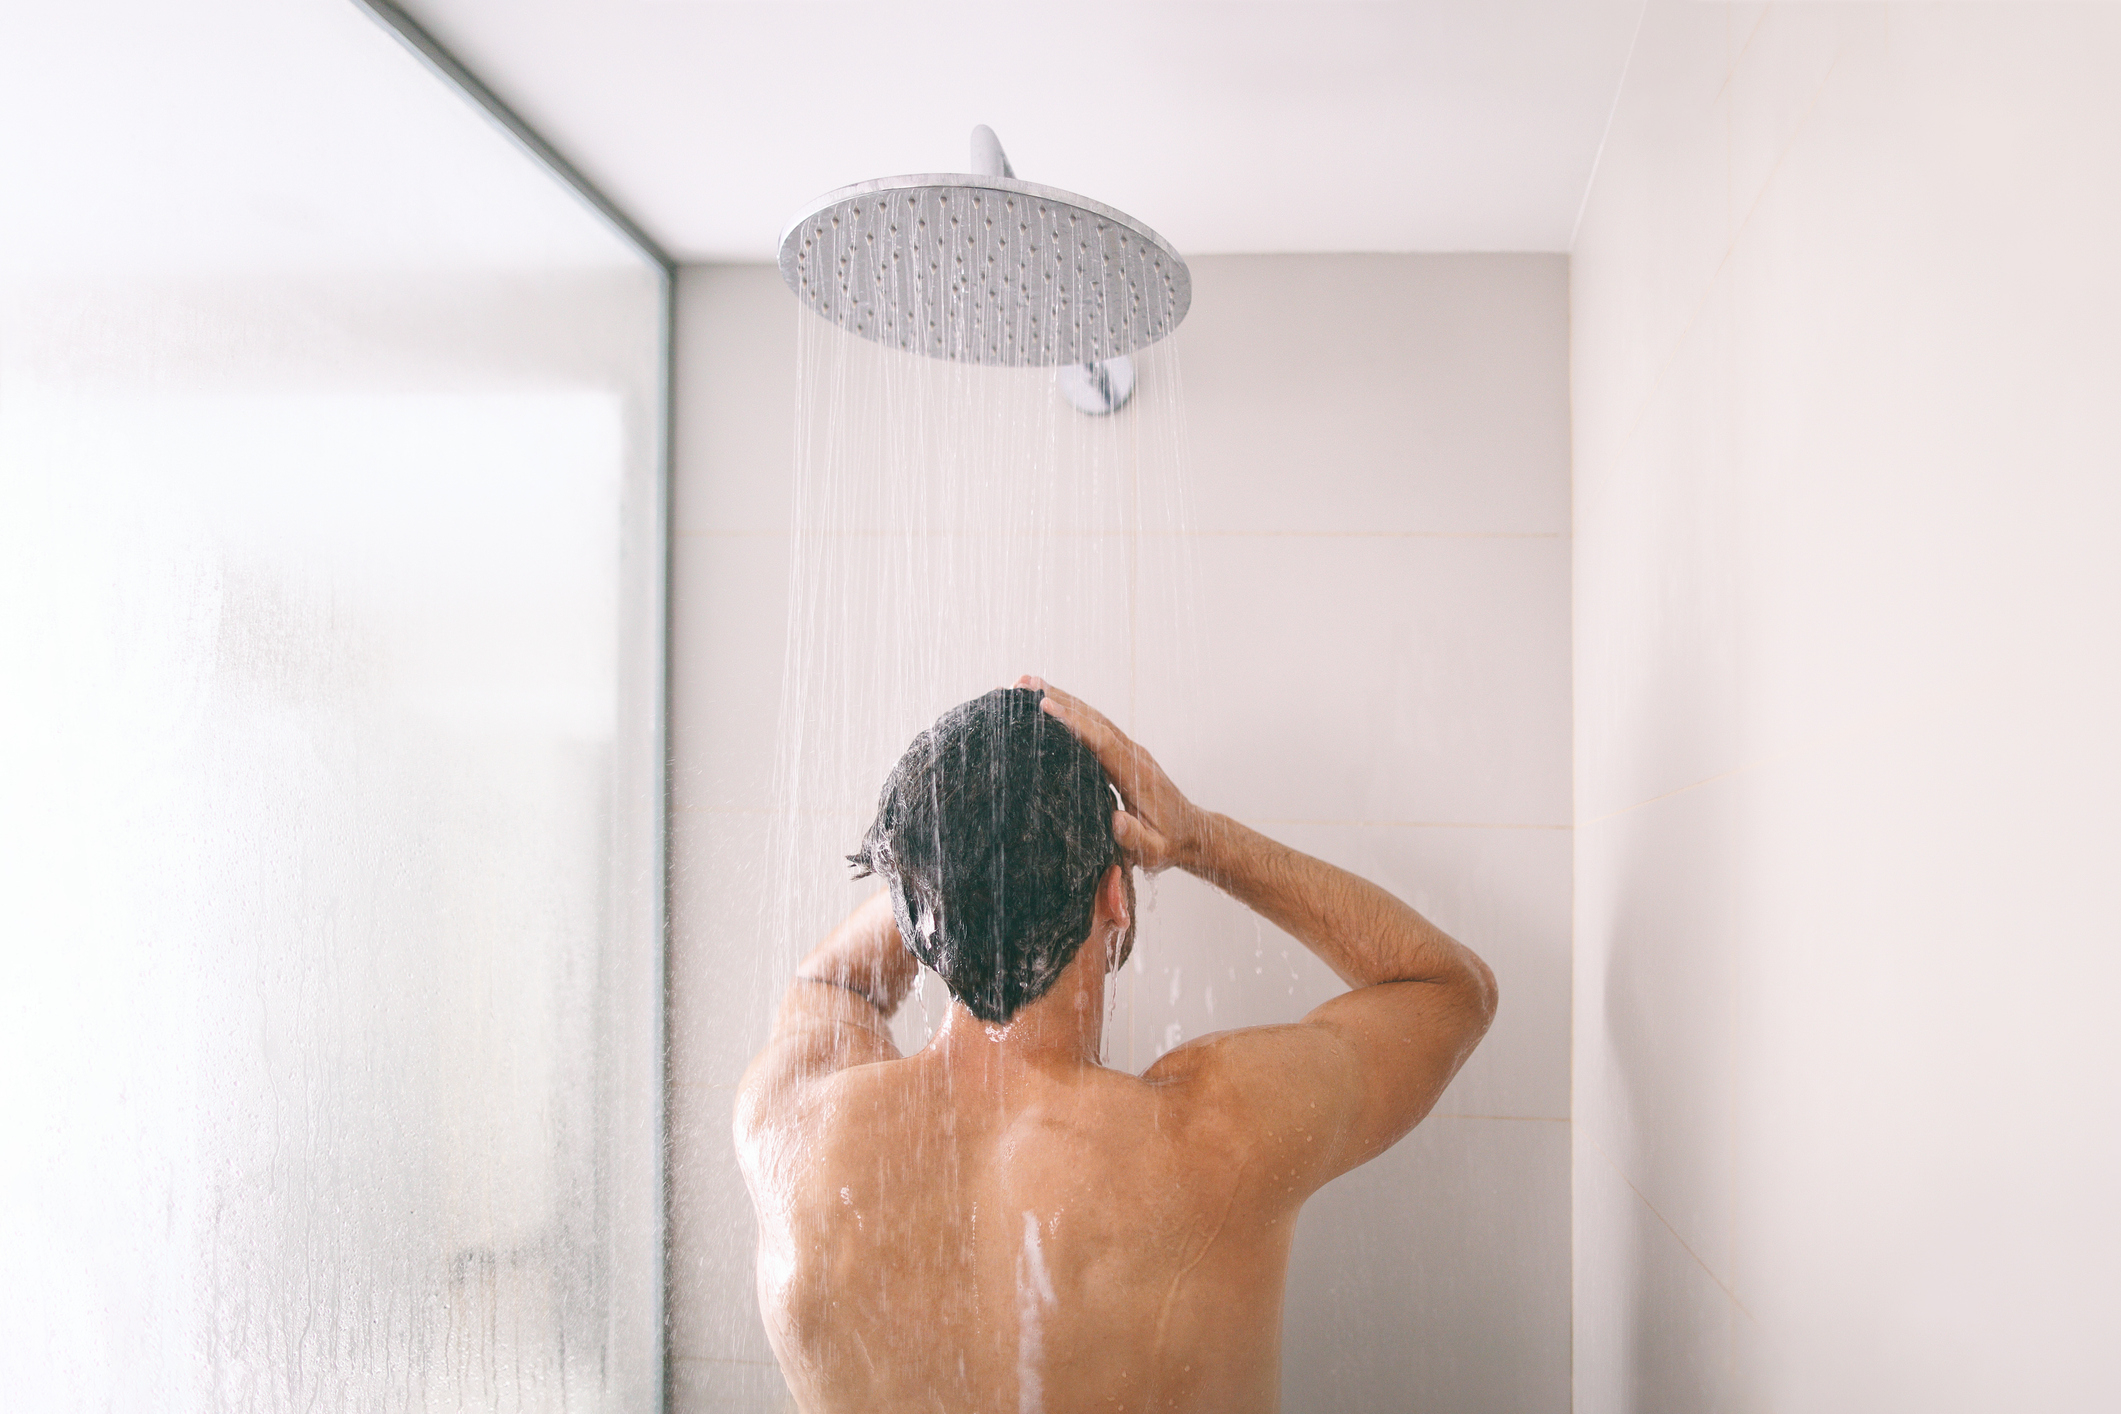 A man showering